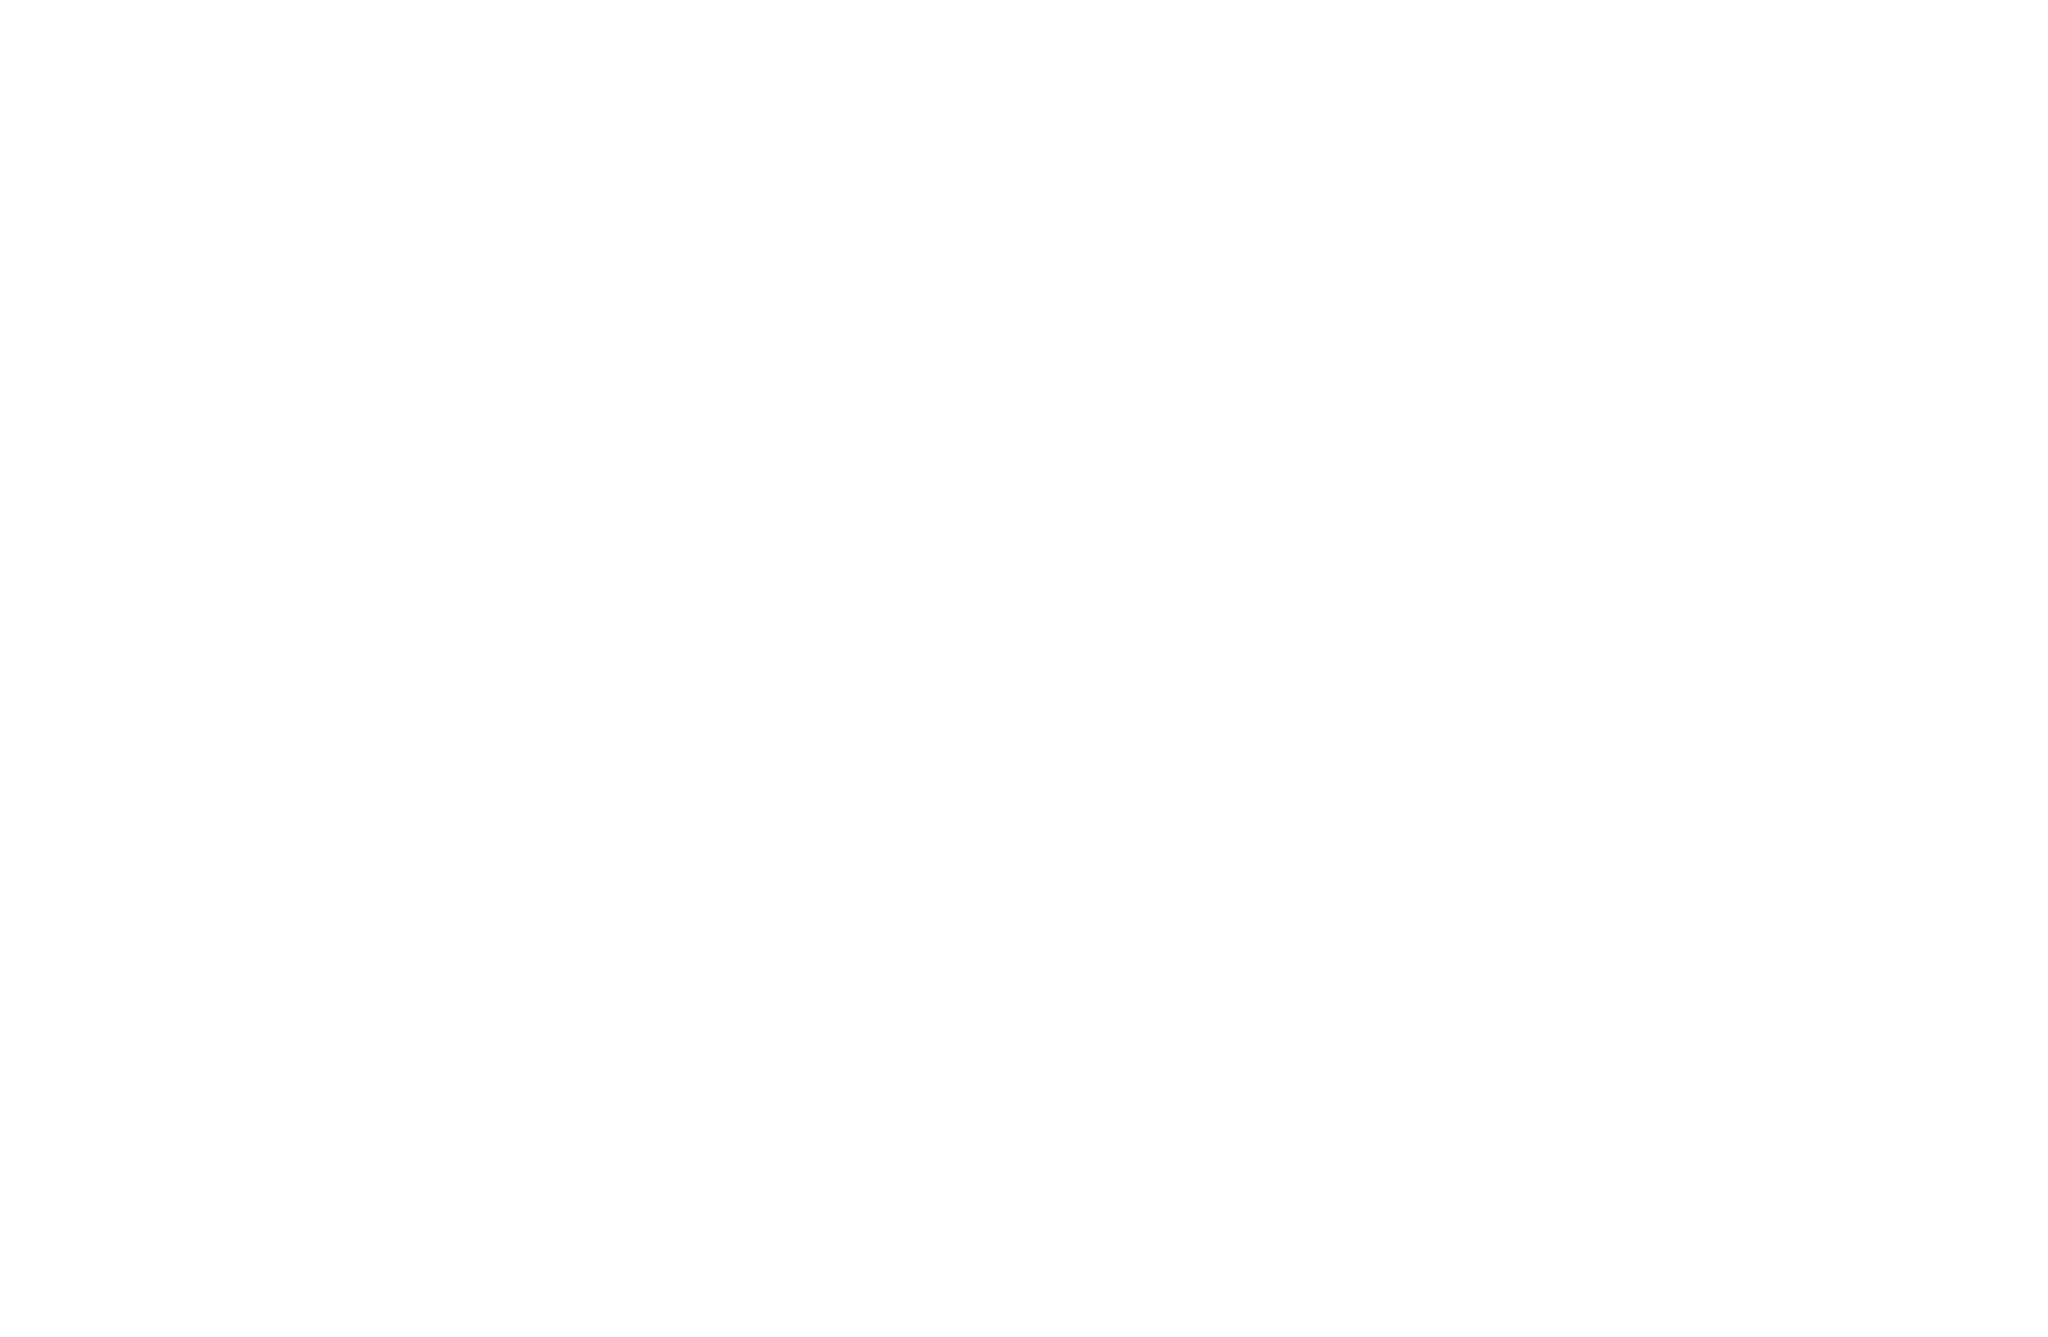 Logotipo Sii blanco